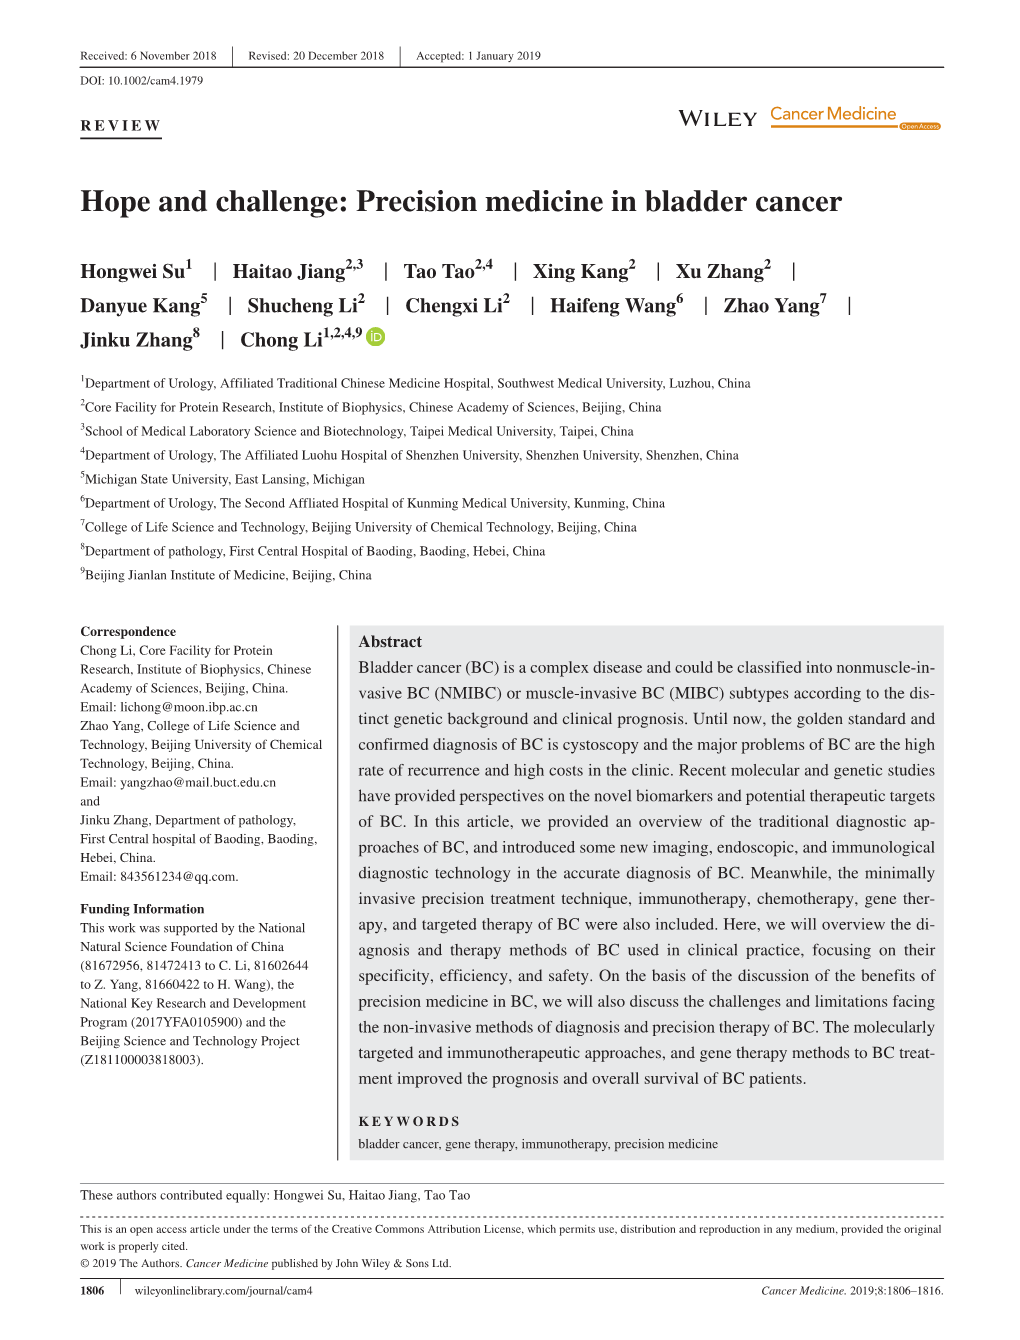 Hope and Challenge: Precision Medicine in Bladder Cancer